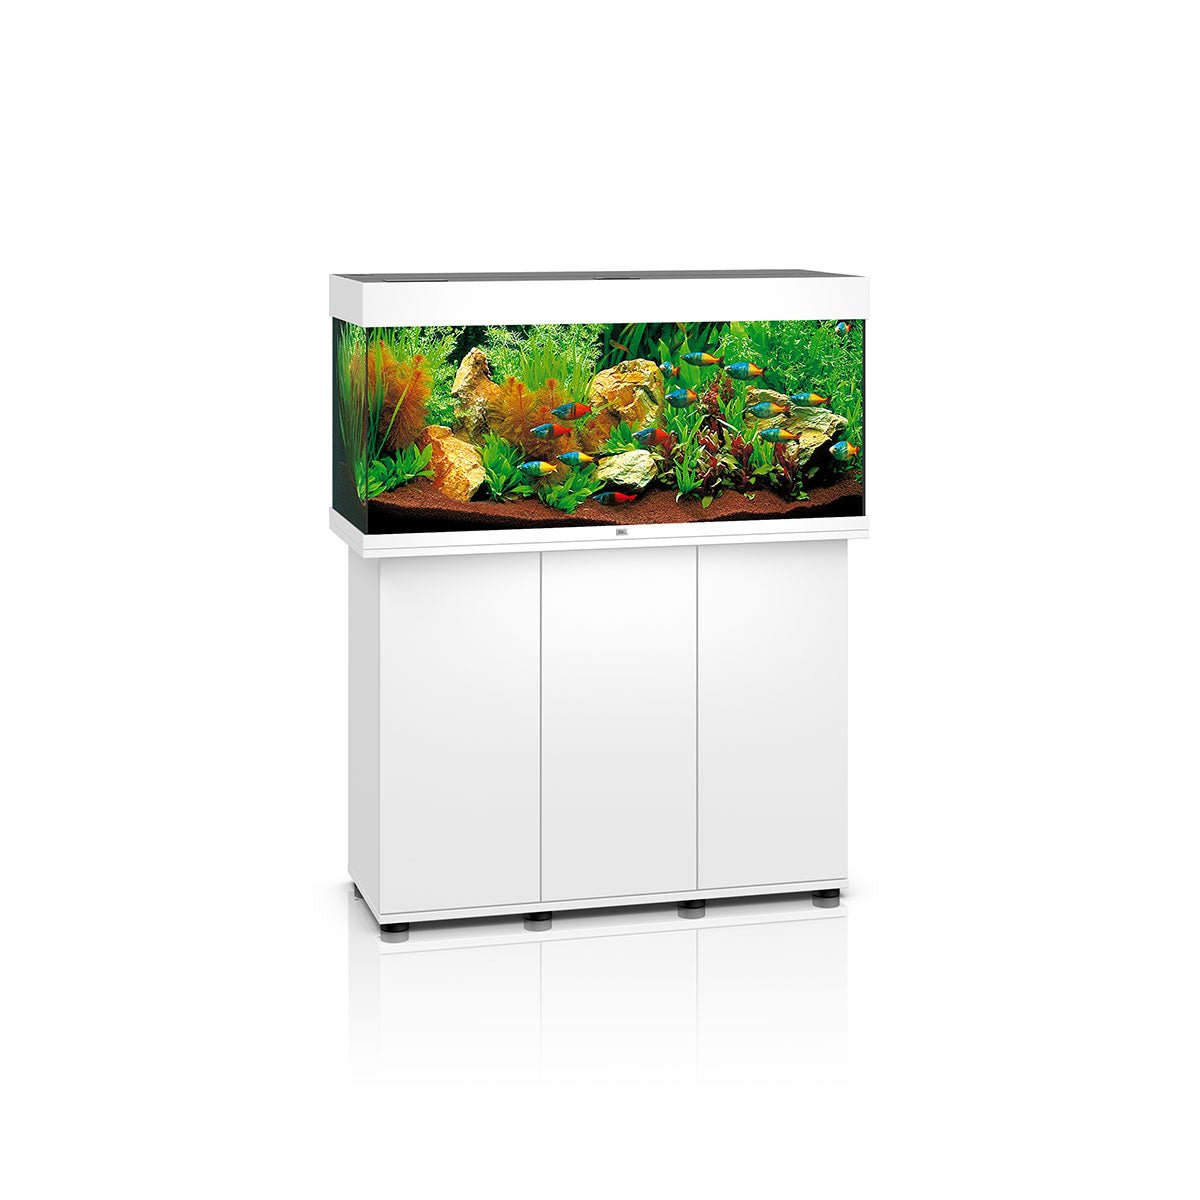 Juwel Rio 180 LED Aquarium and Cabinet (White) - Charterhouse Aquatics